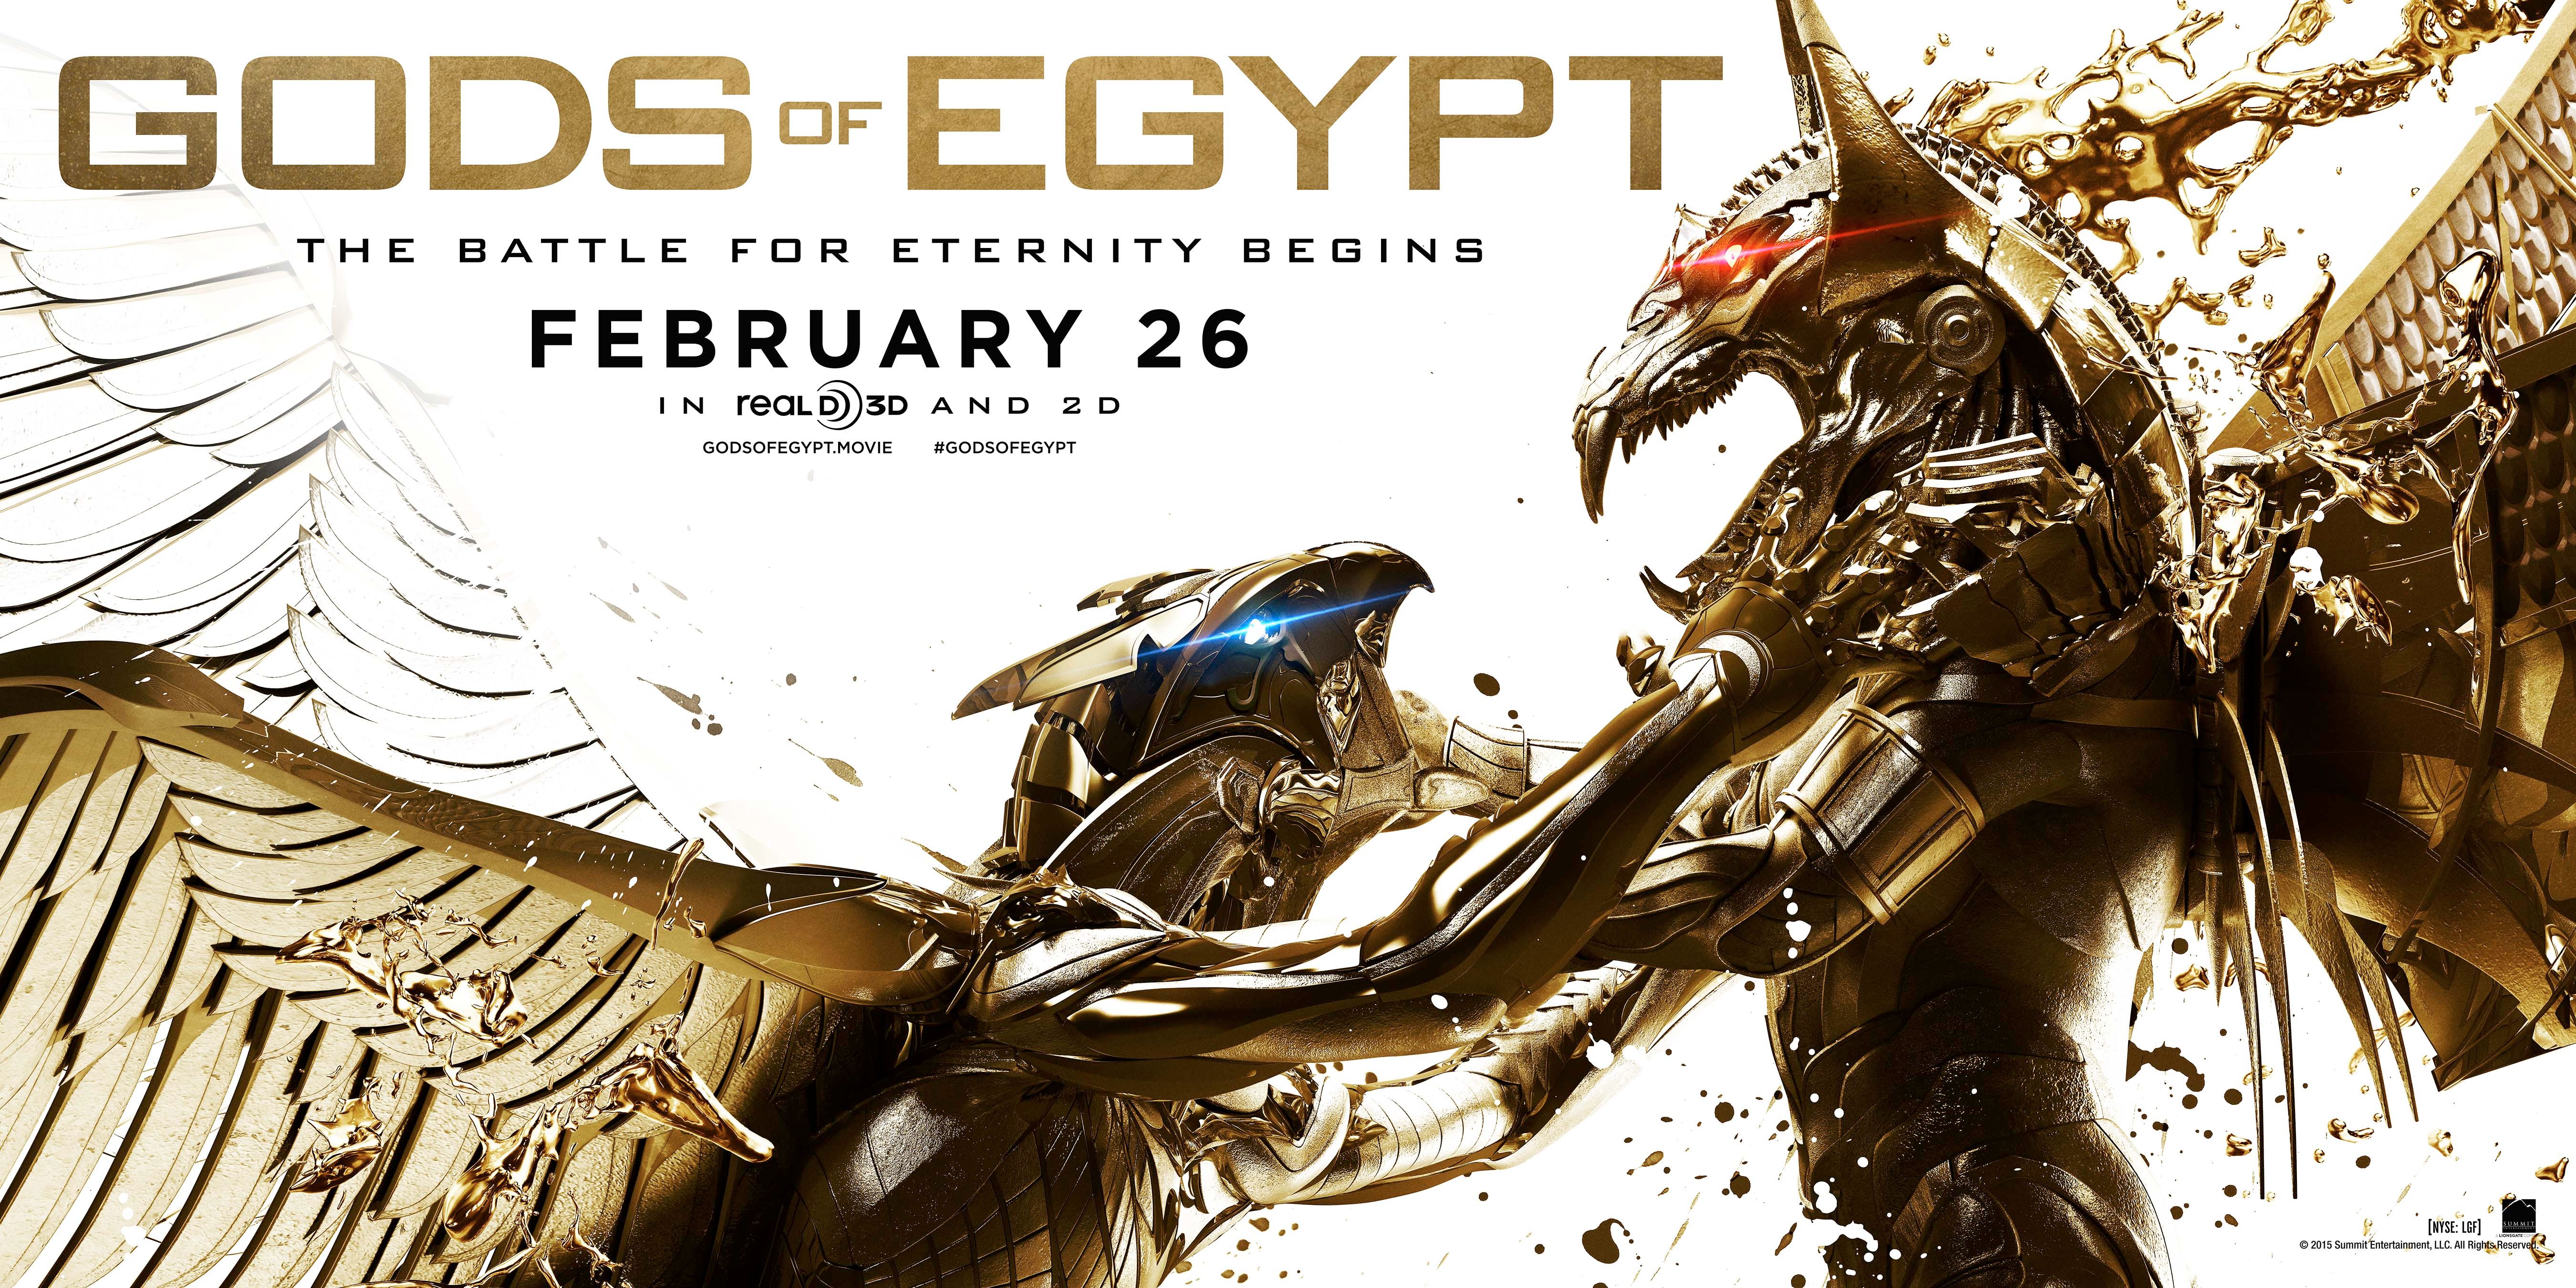 Gods of Egypt Movie Poster HD 2016 on hdmovie-2016.blogspot.com